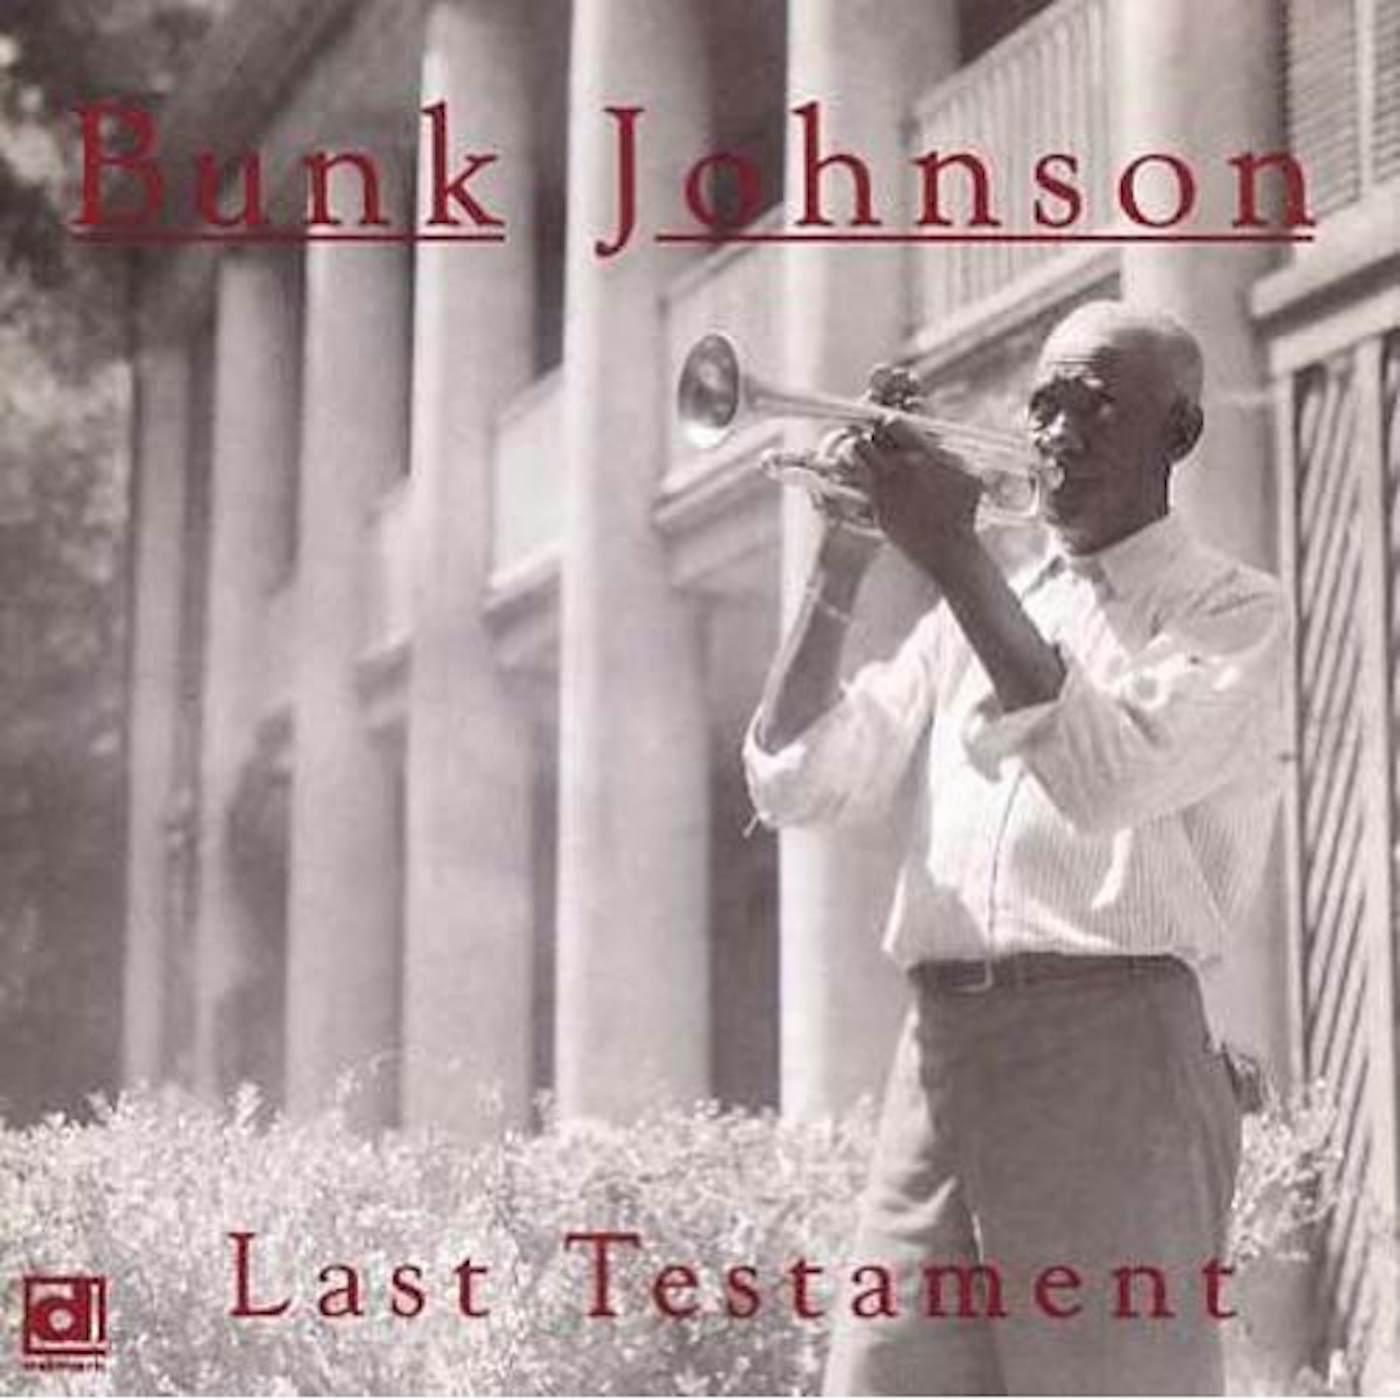 Bunk Johnson LAST TESTAMENT CD